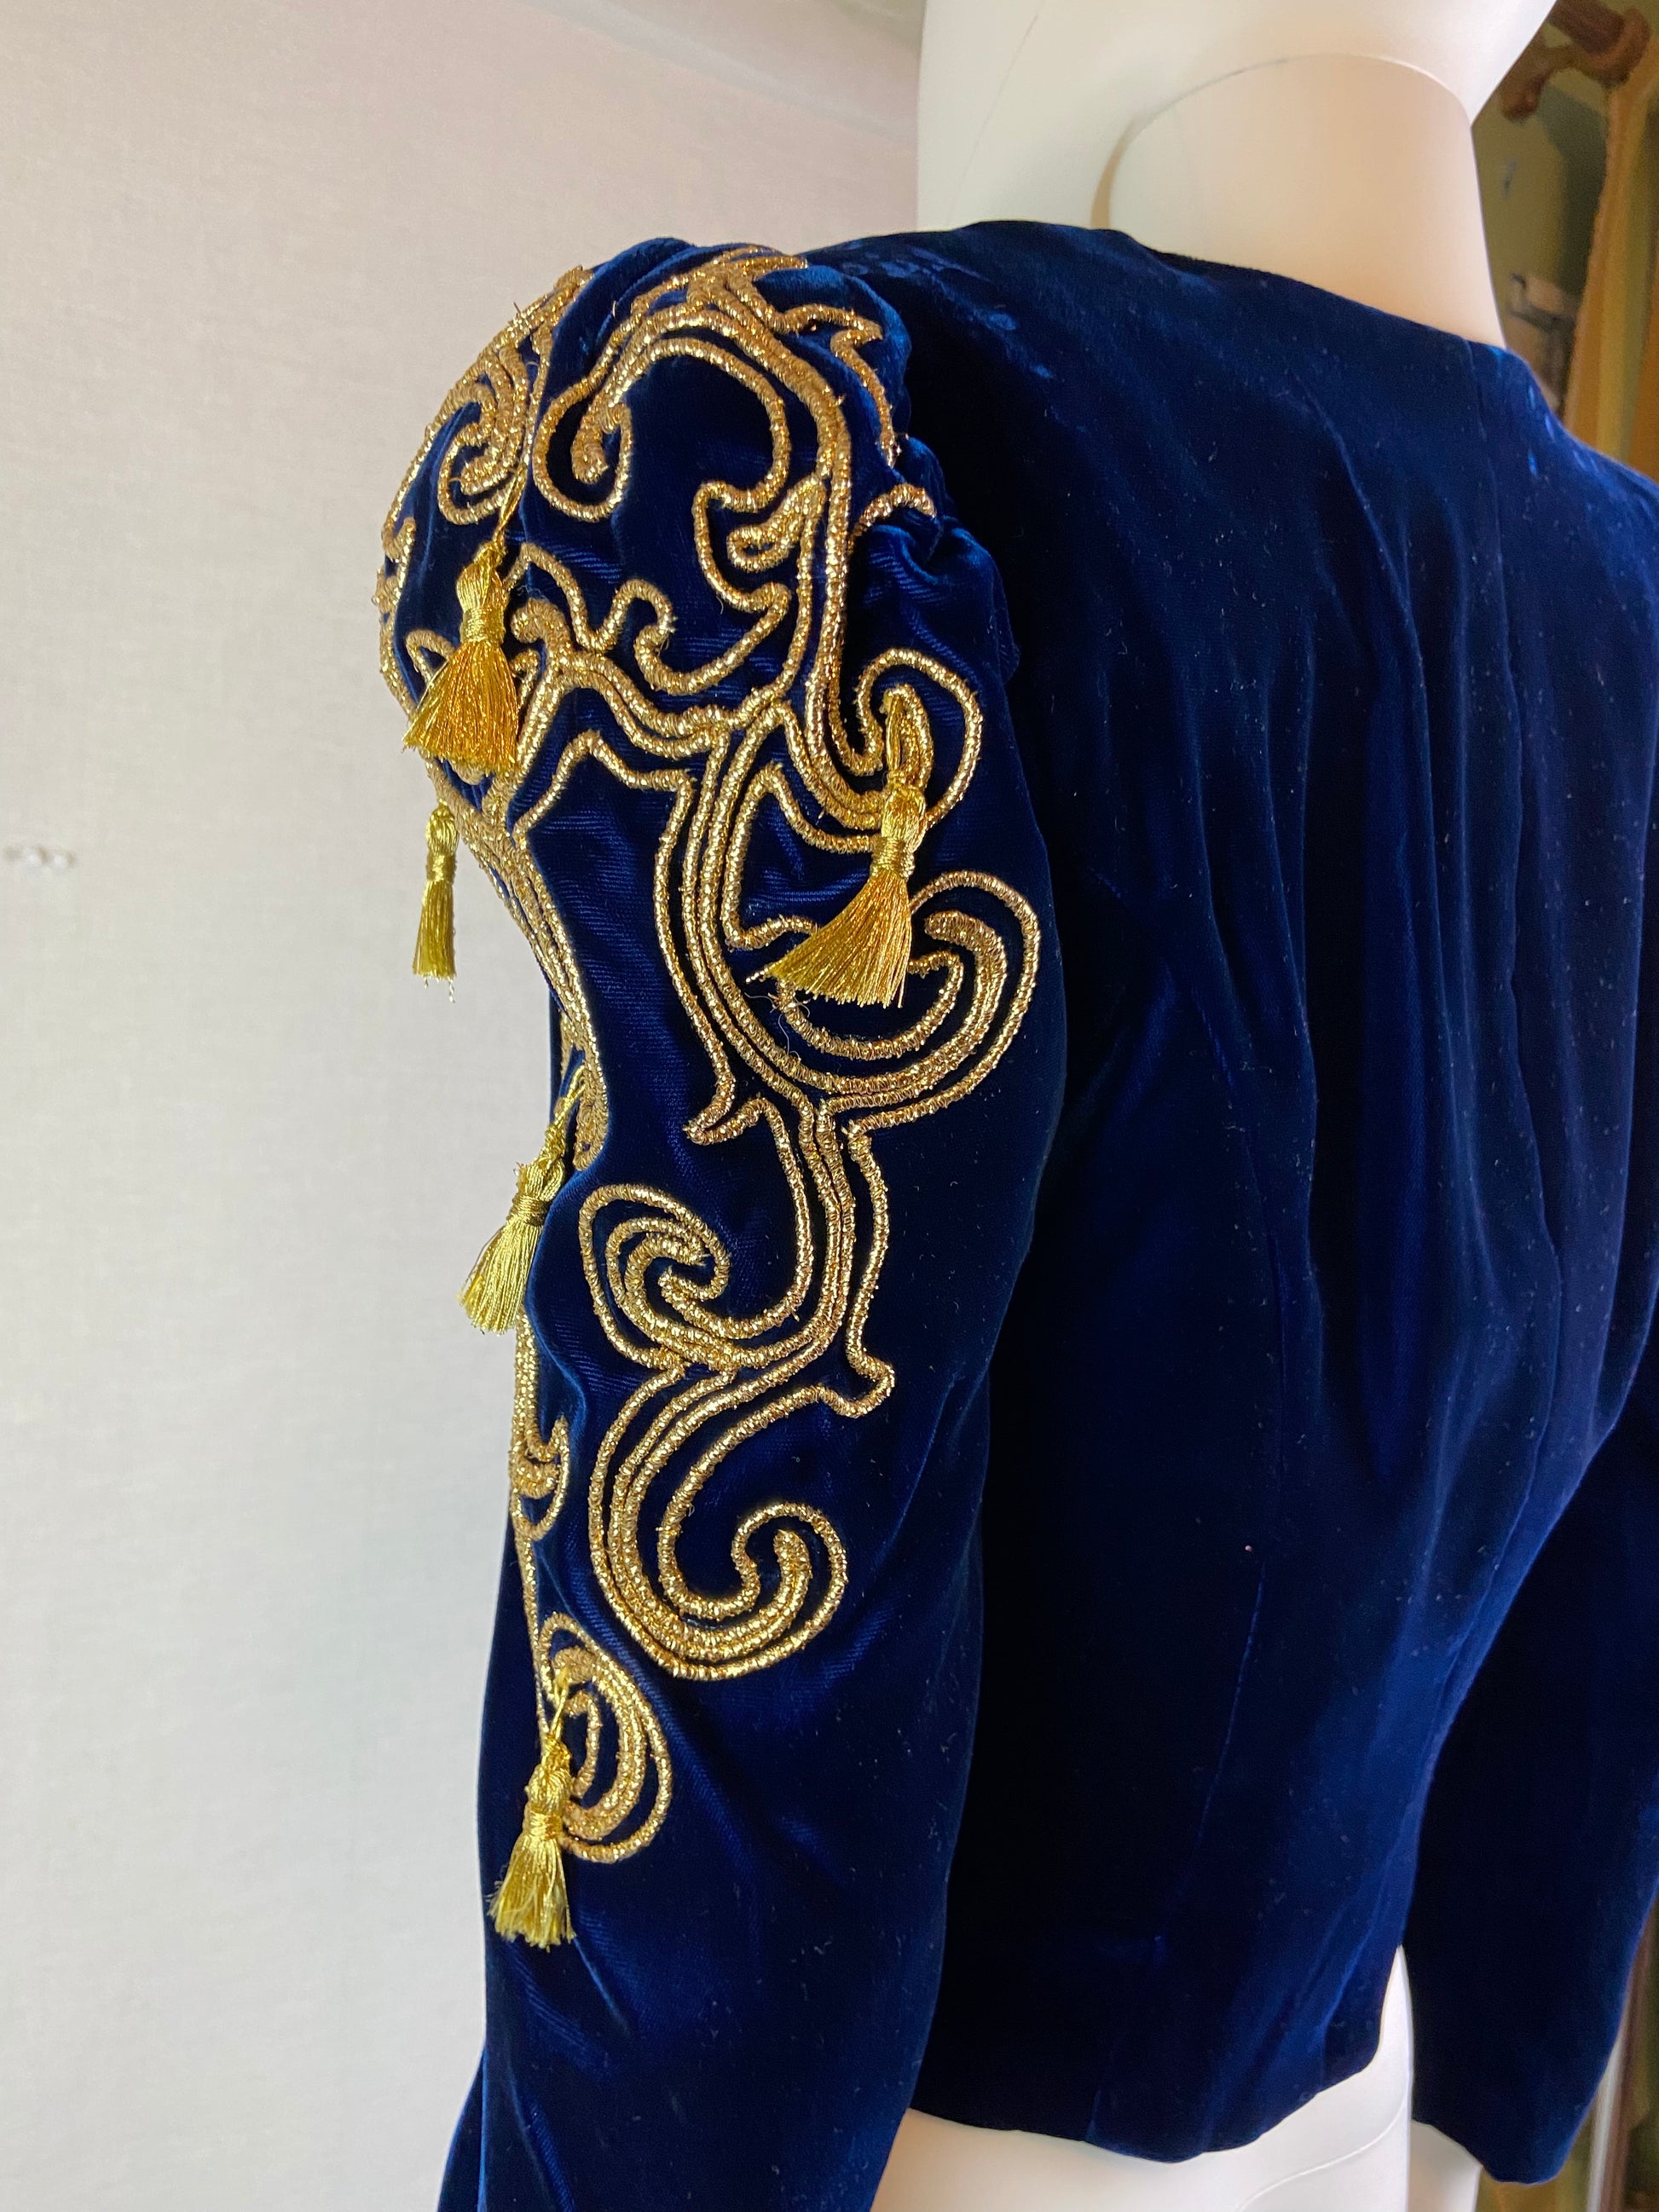 Farinae Navy Blue Velvet Gold Baroque Blazer Jacket ABBY ESSIE STUDIOS